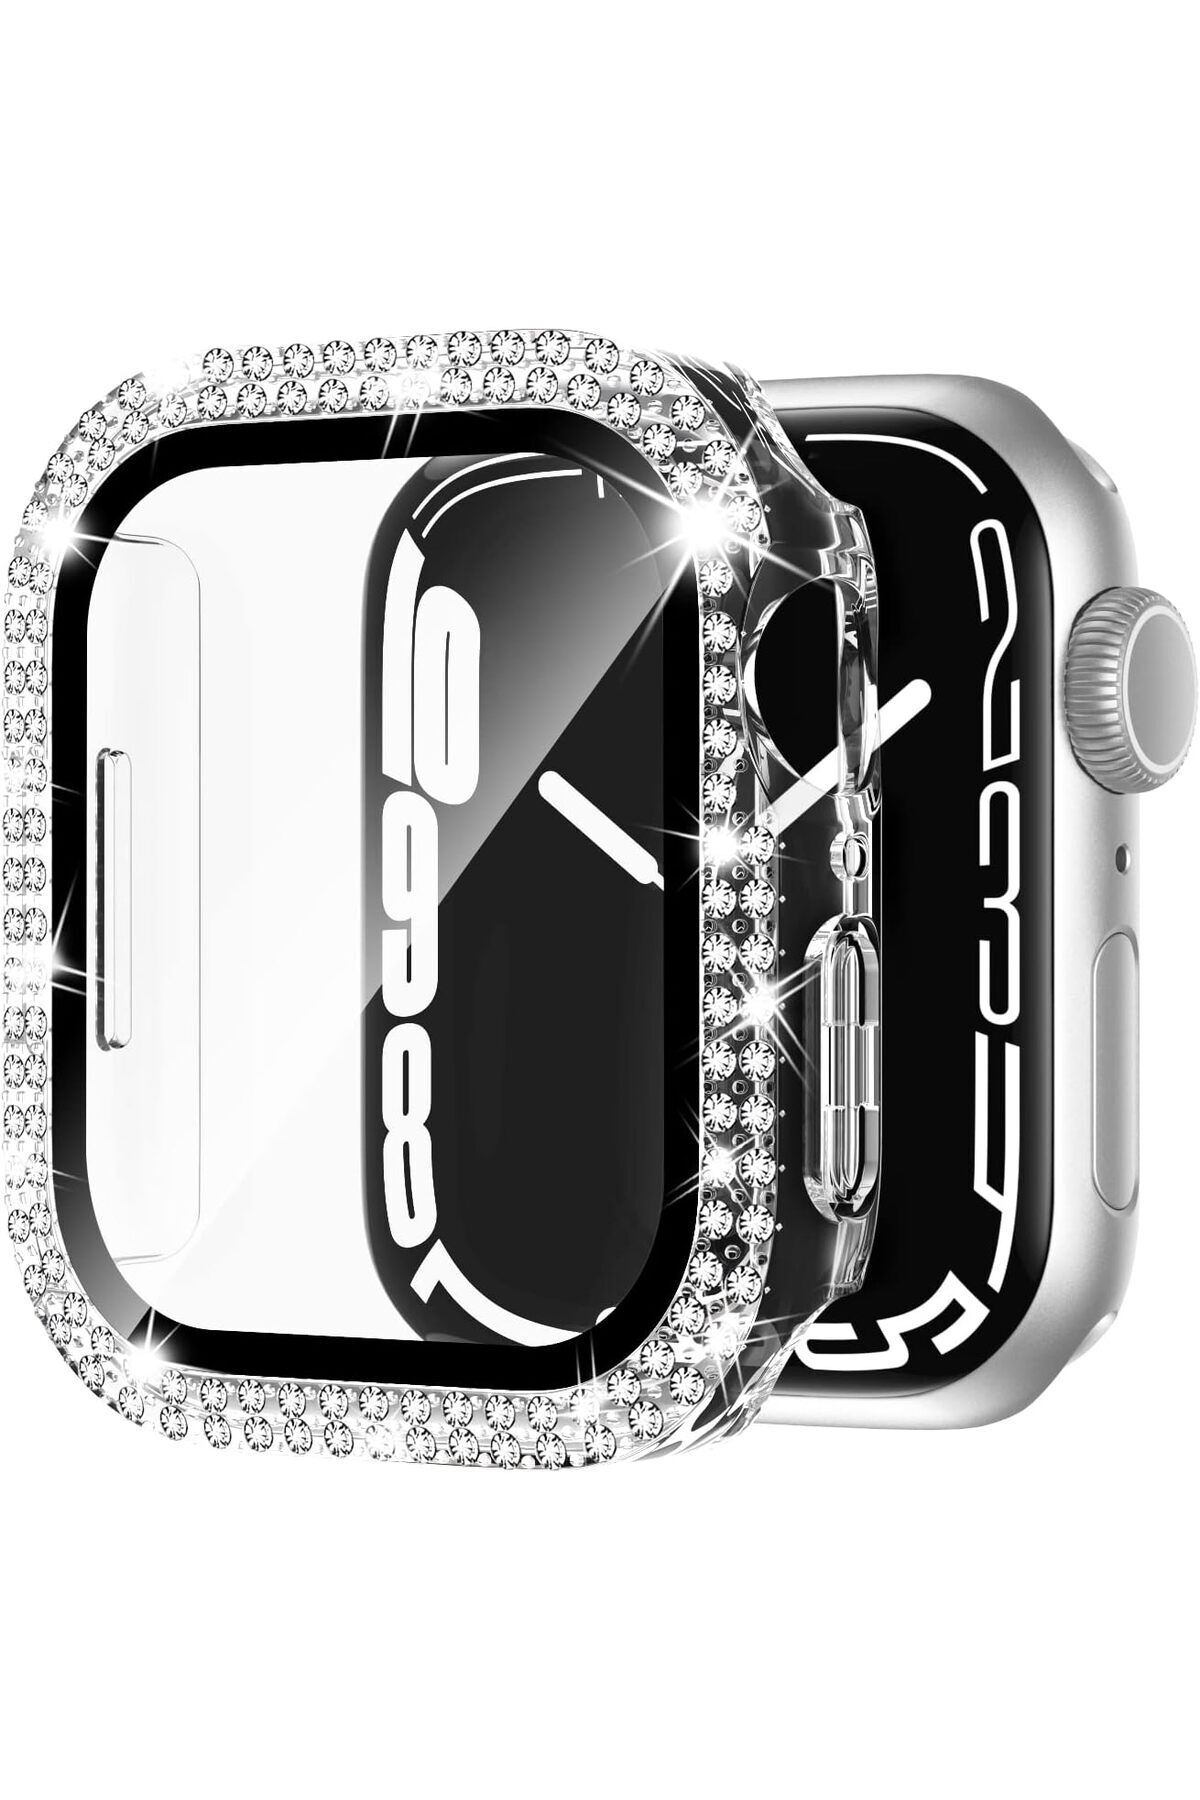 W wopiece Apple Watch 1 2 3 4 5 6 7 9 Se Serisi Uyum 45mm Taşlı DİAMOND 360 Tam Koruma Şeffaf Silikon Kılıf